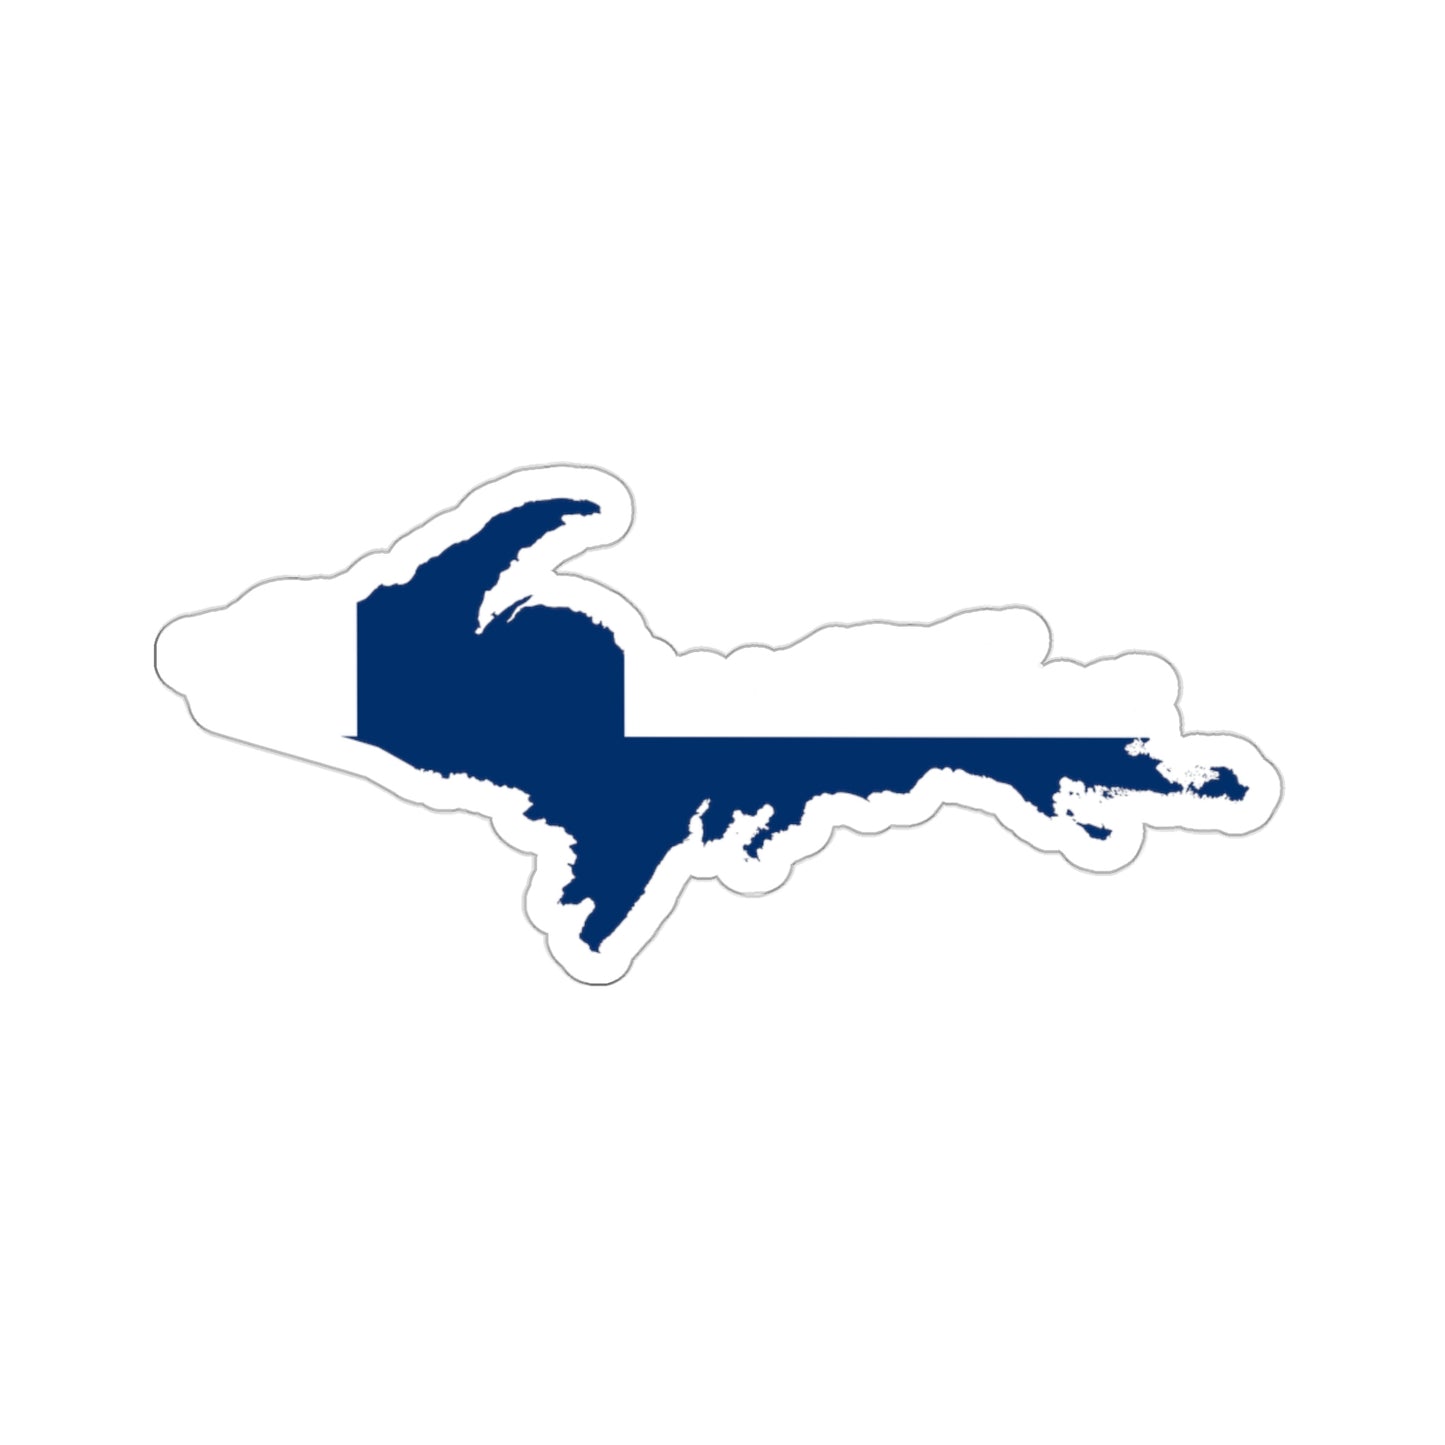 Michigan Upper Peninsula Kiss-Cut Sticker (w/ UP Finland Flag Outline)